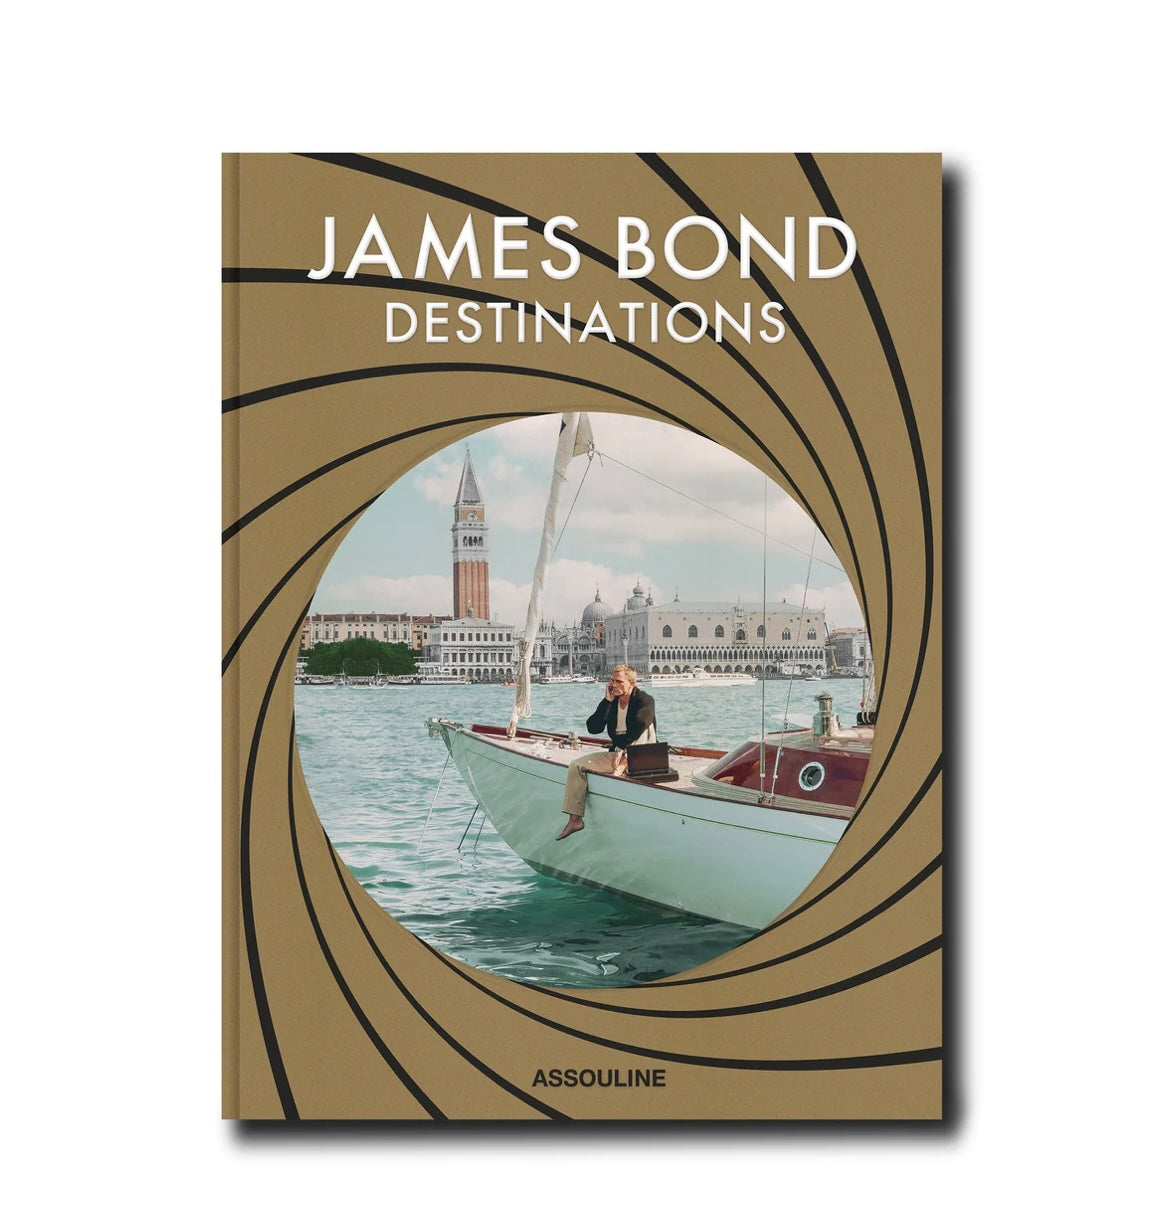 James Bond Destinations Book